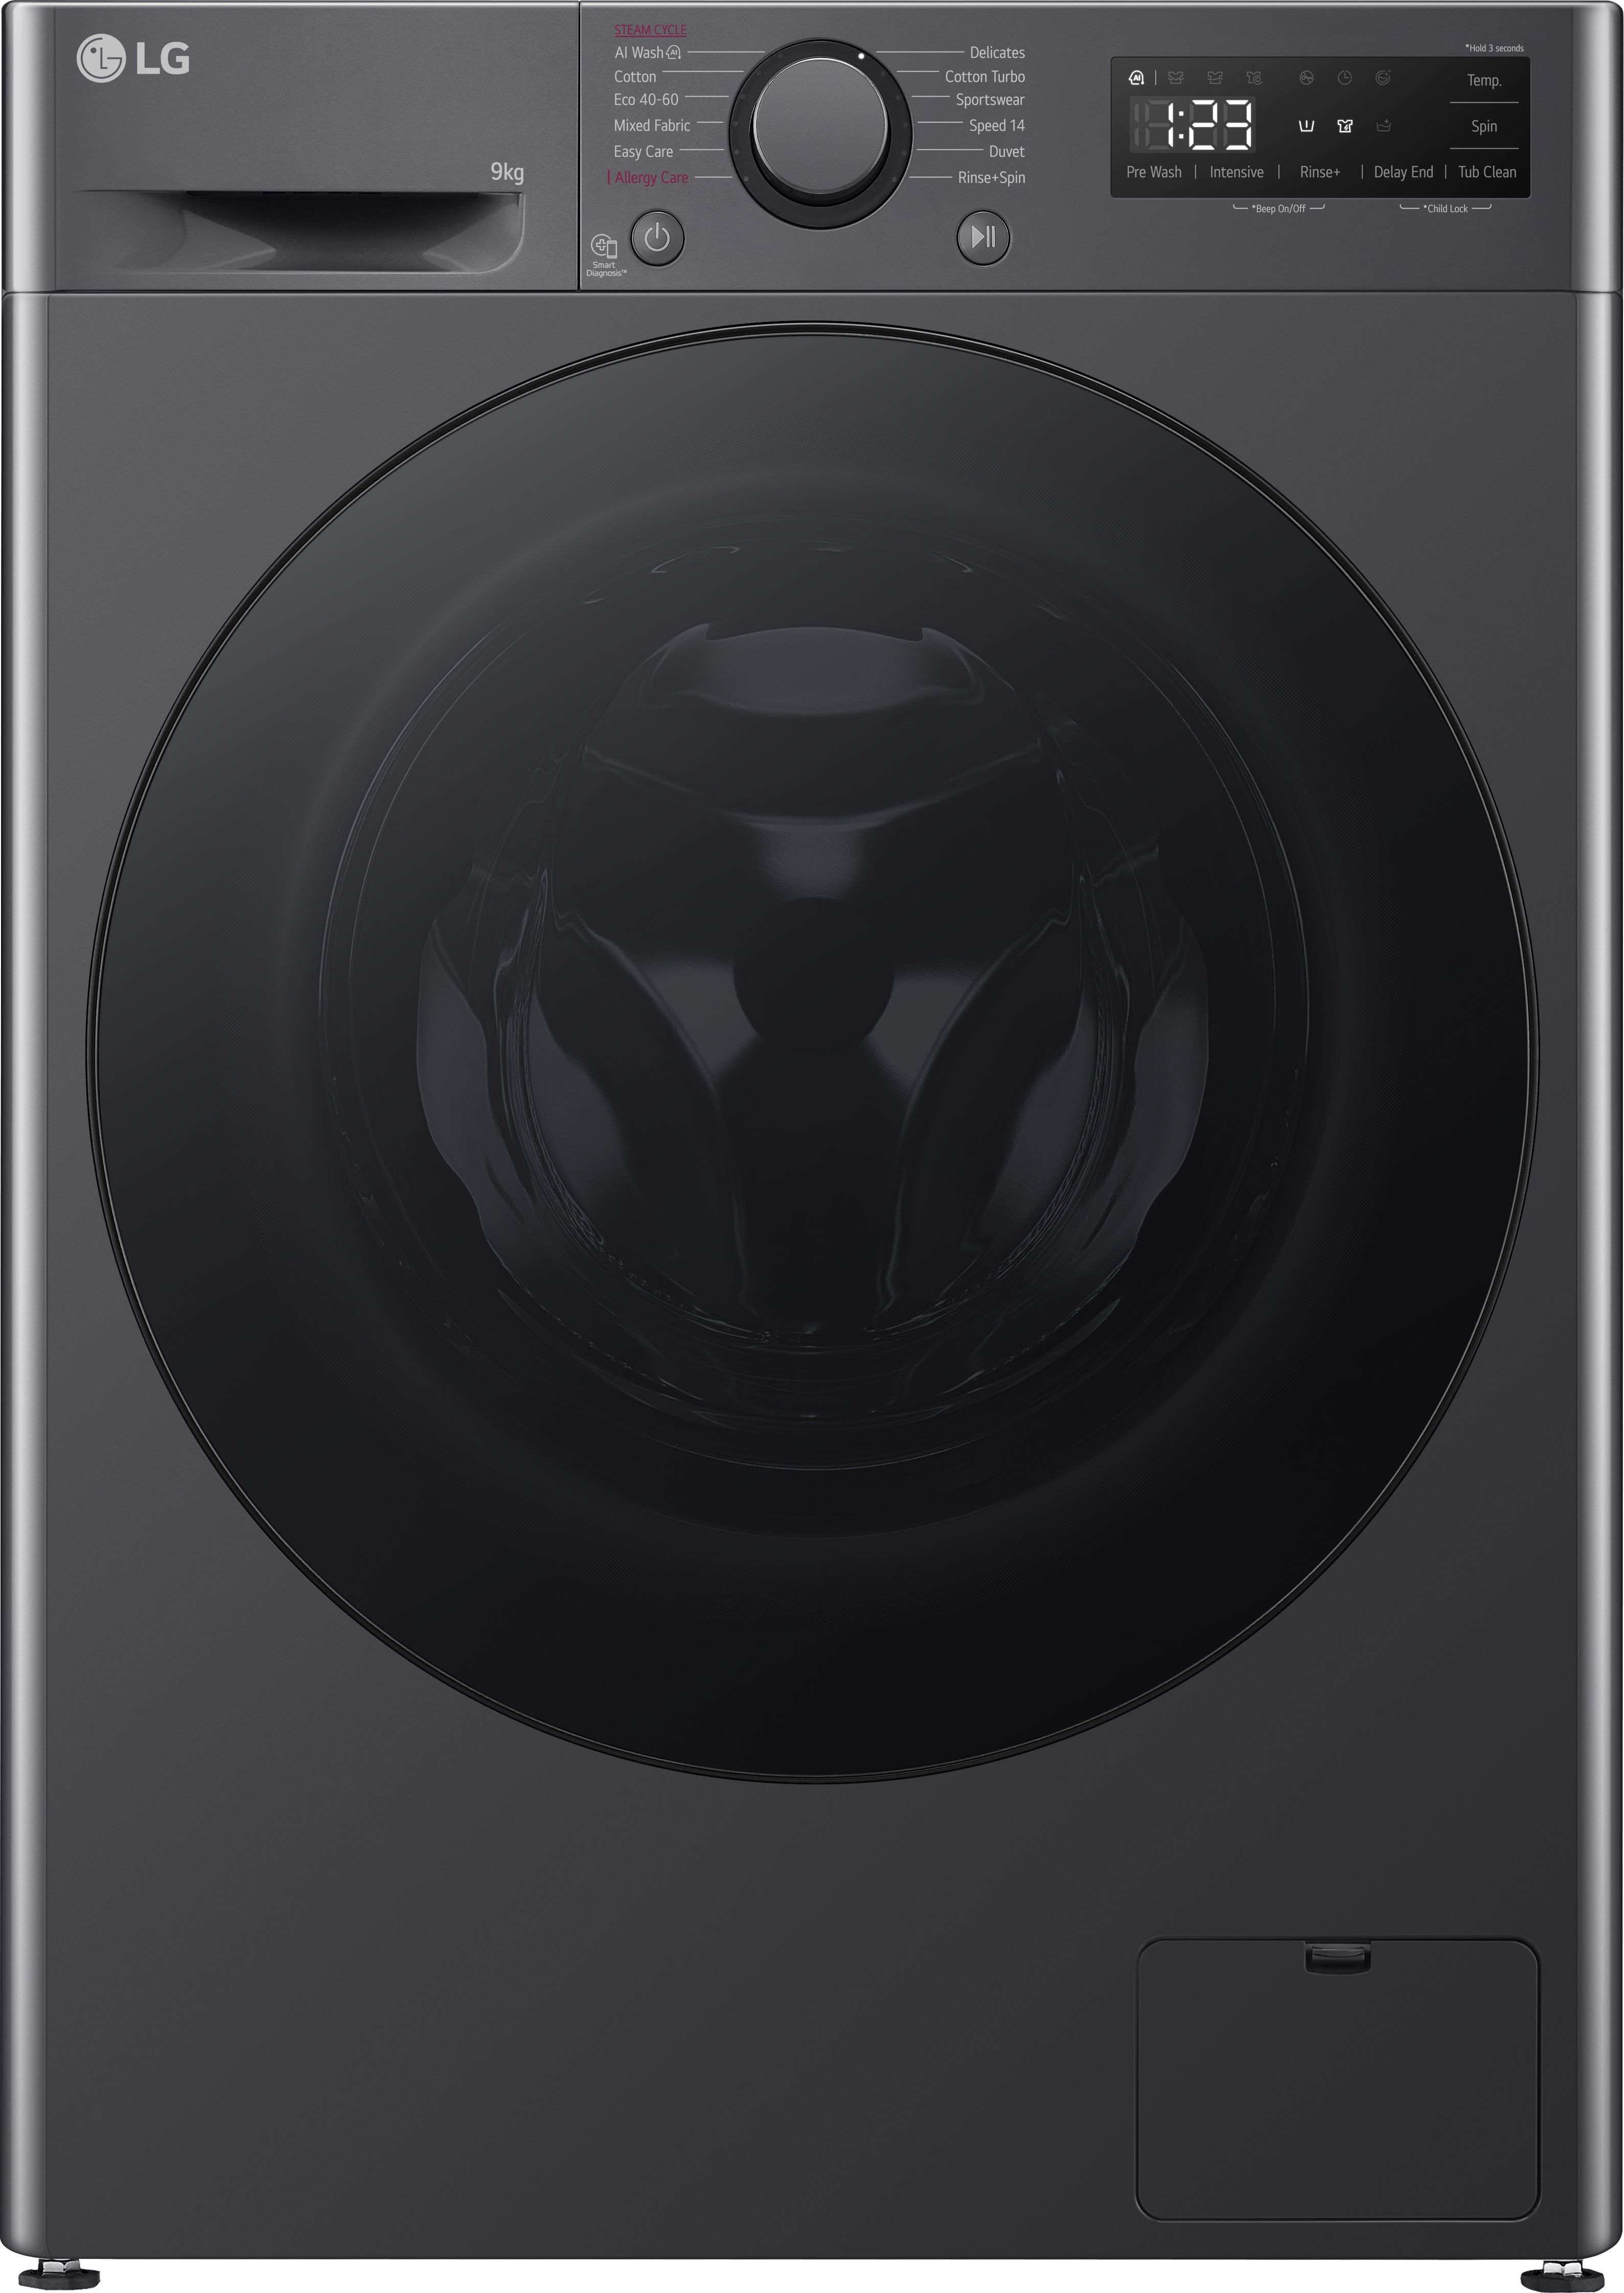 LG TurboWash F2A509GBLN1 9kg Washing Machine with 1200 rpm - Slate Grey - A Rated, Slate Grey